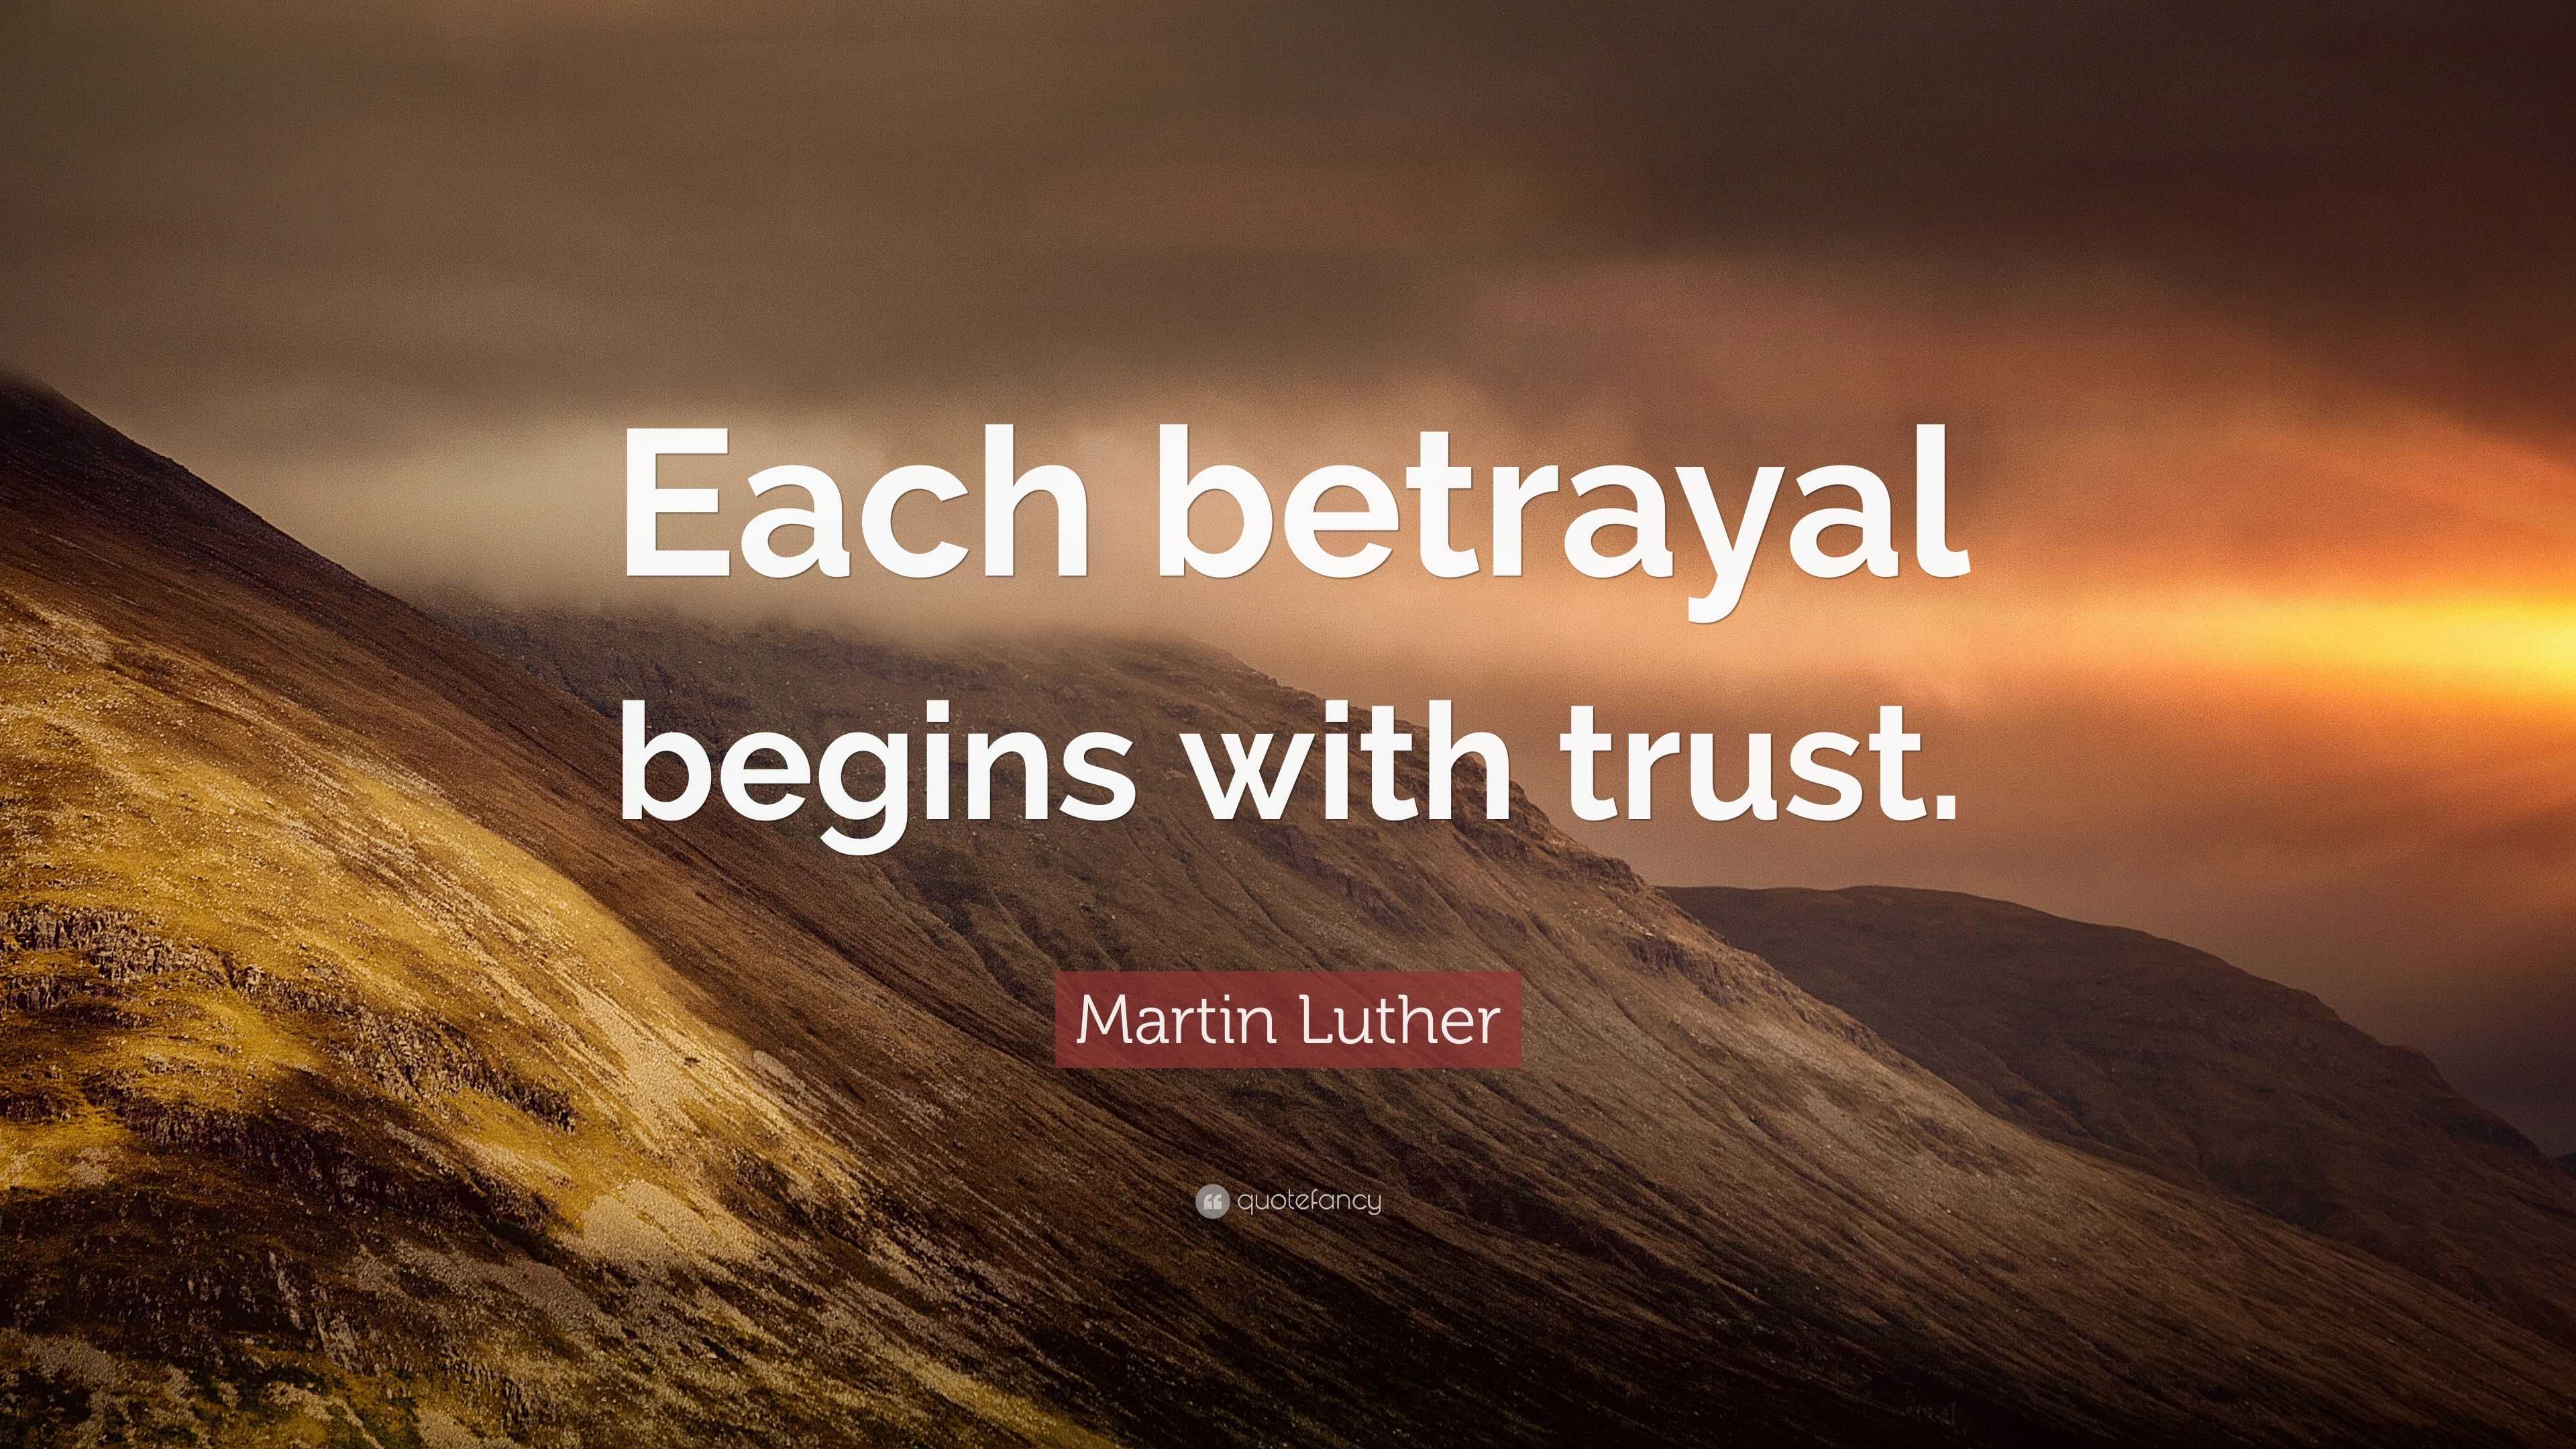 Betrayal of Trust